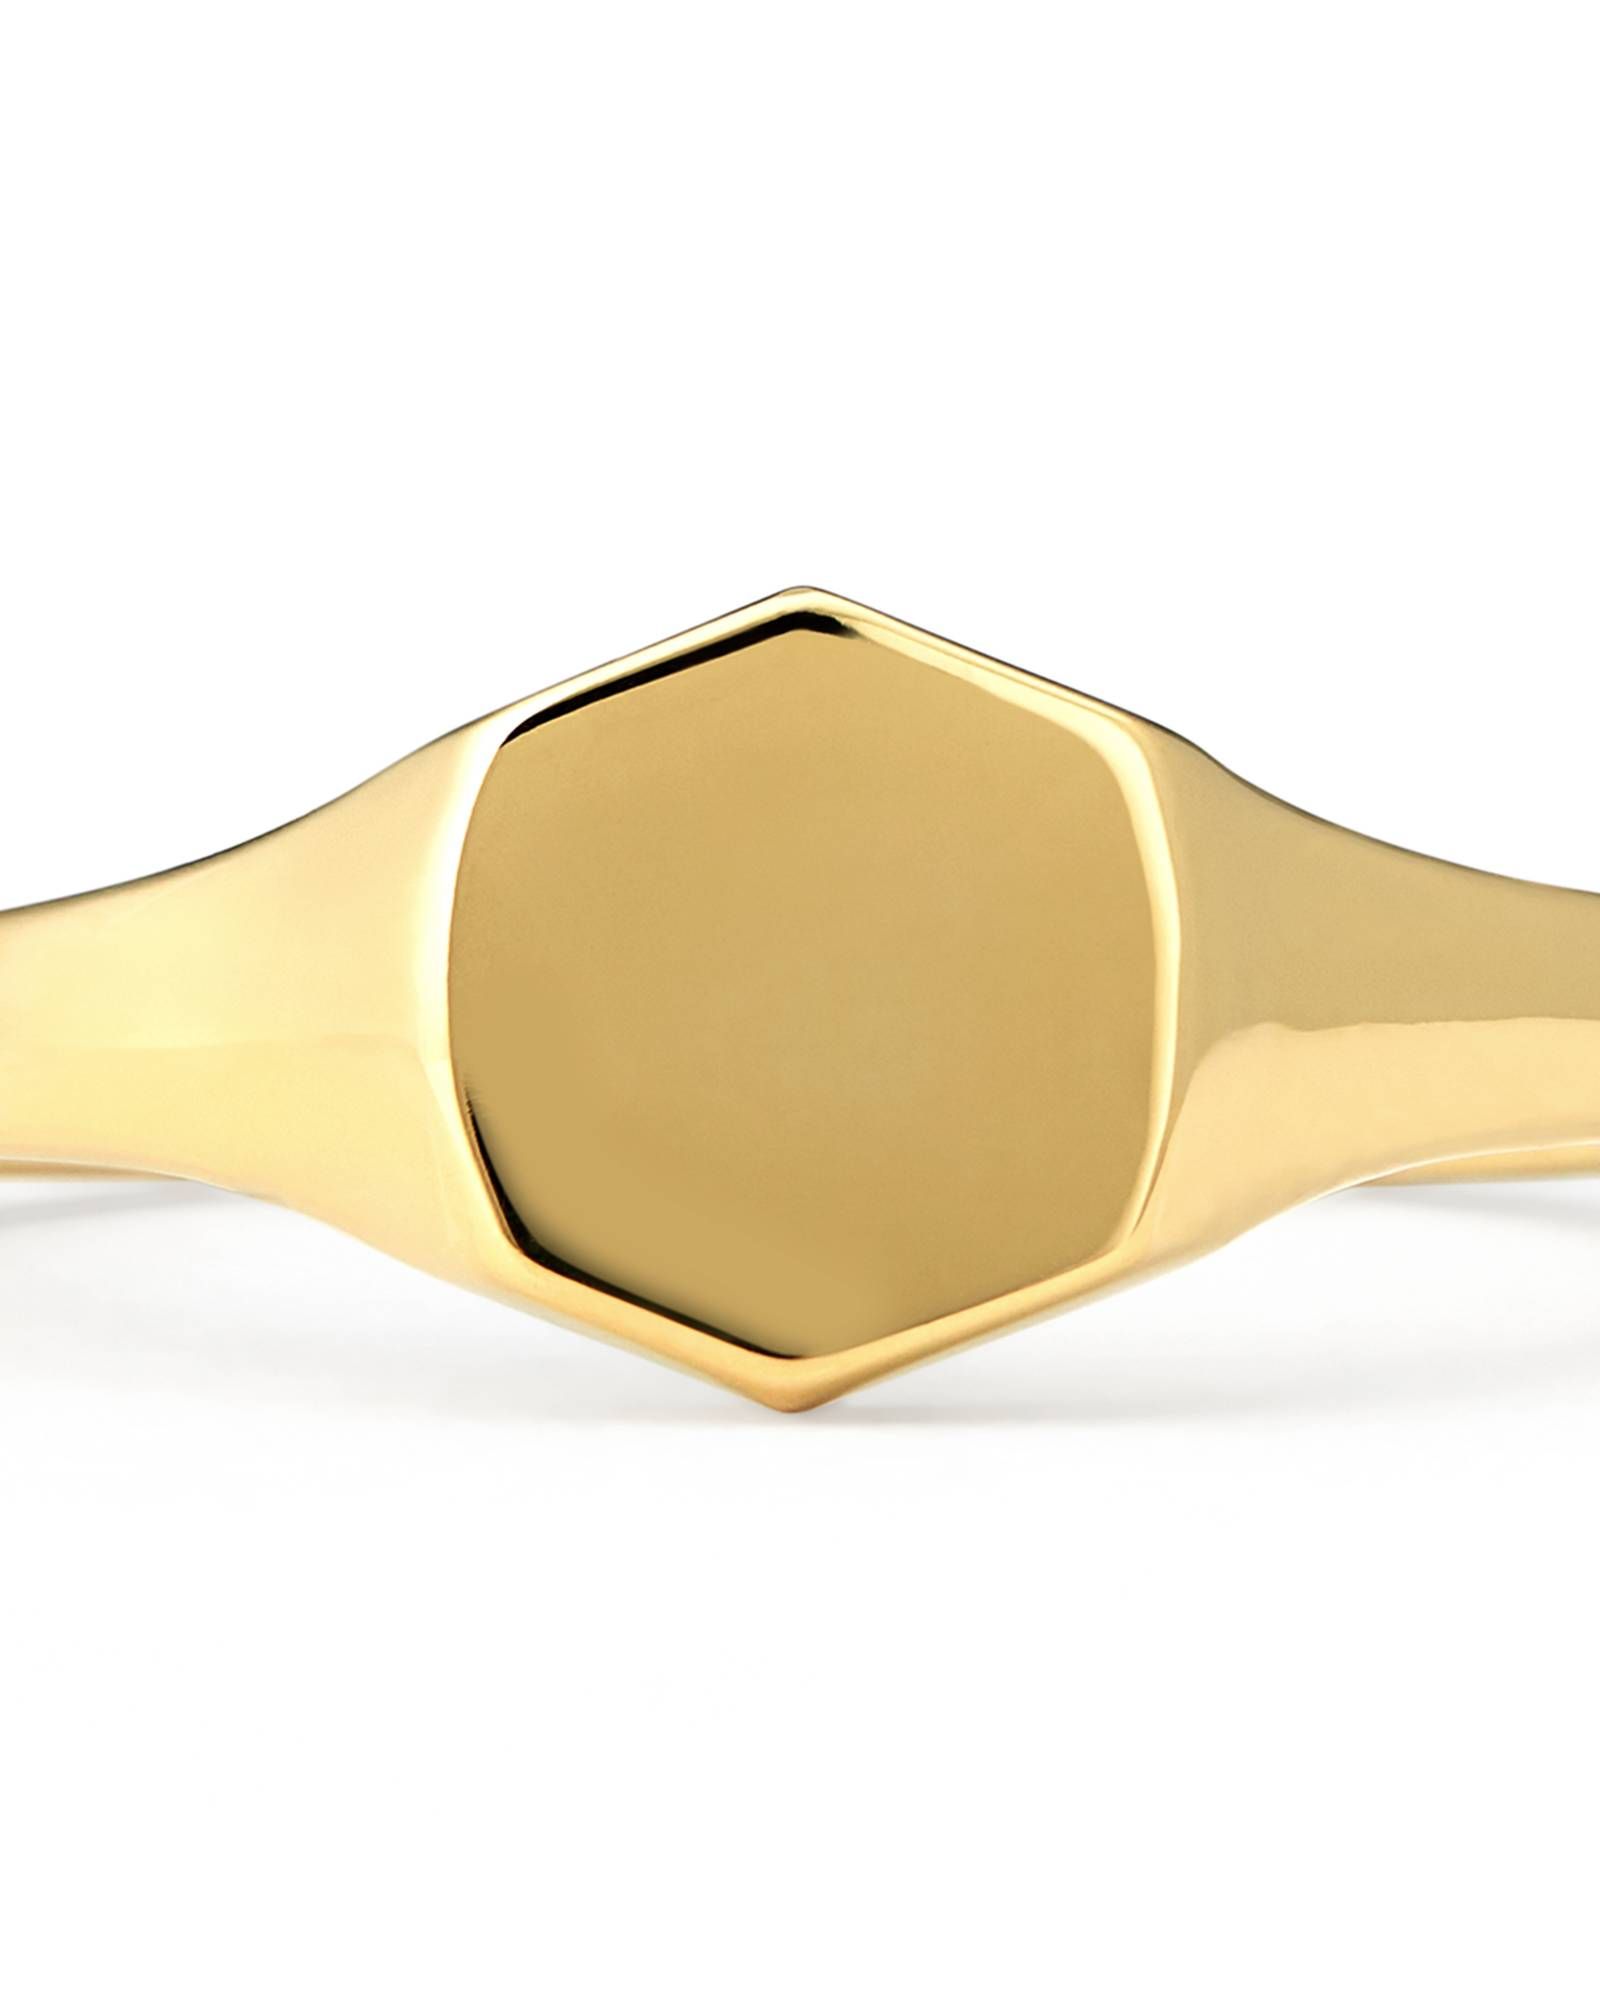 Davis Signet Ring in 18k Gold Vermeil | Kendra Scott